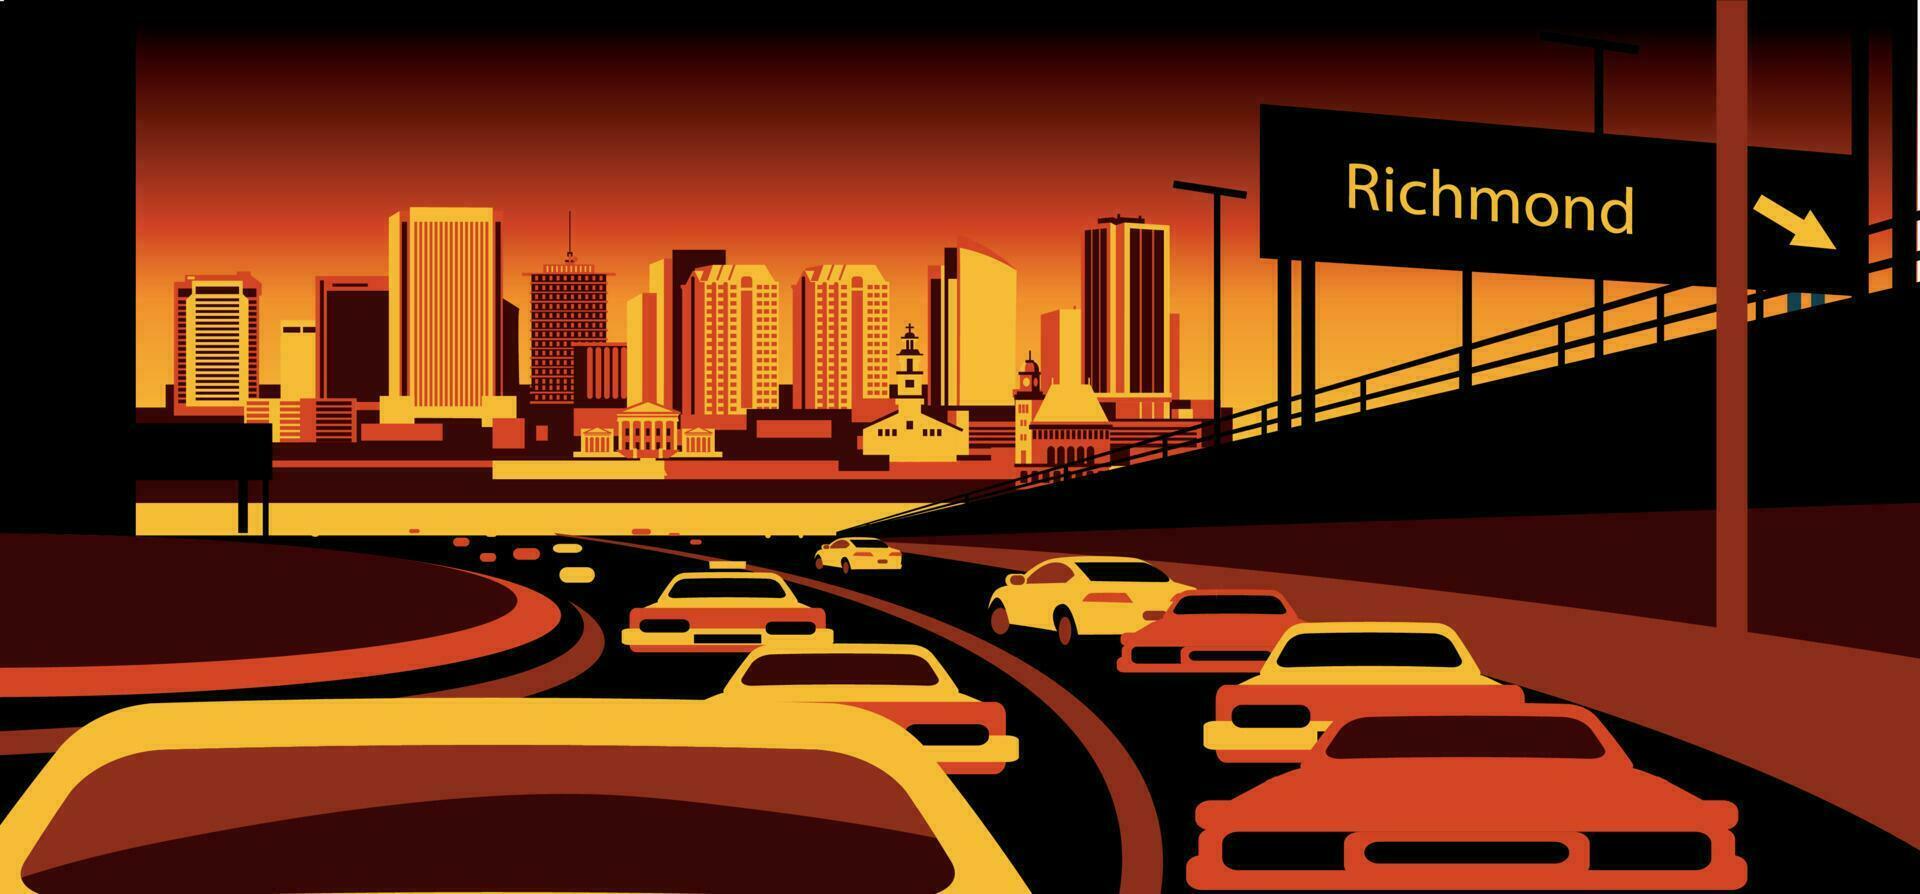 Richmond skyline vector illustration